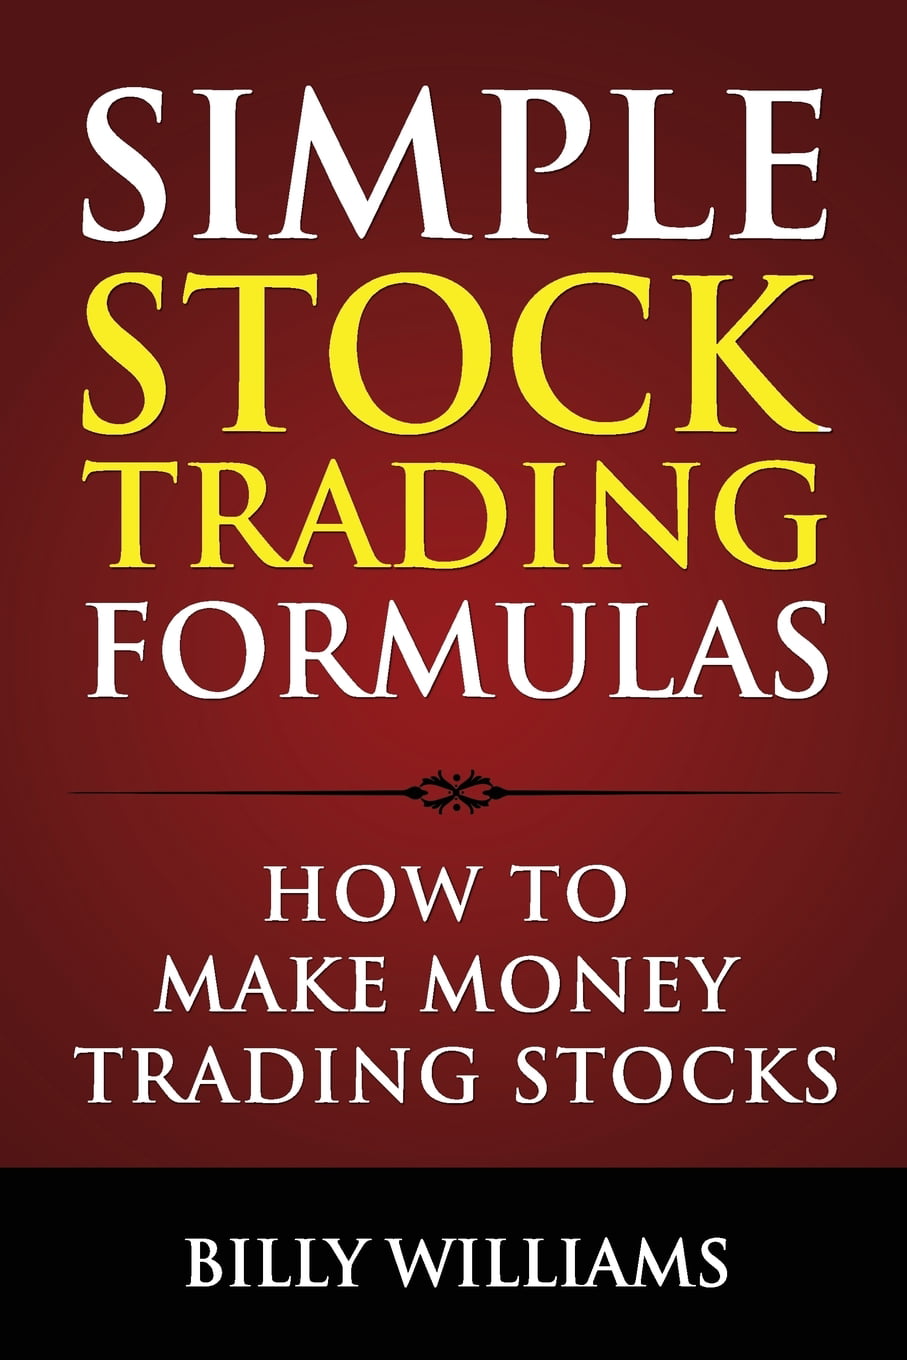 Trading stocks